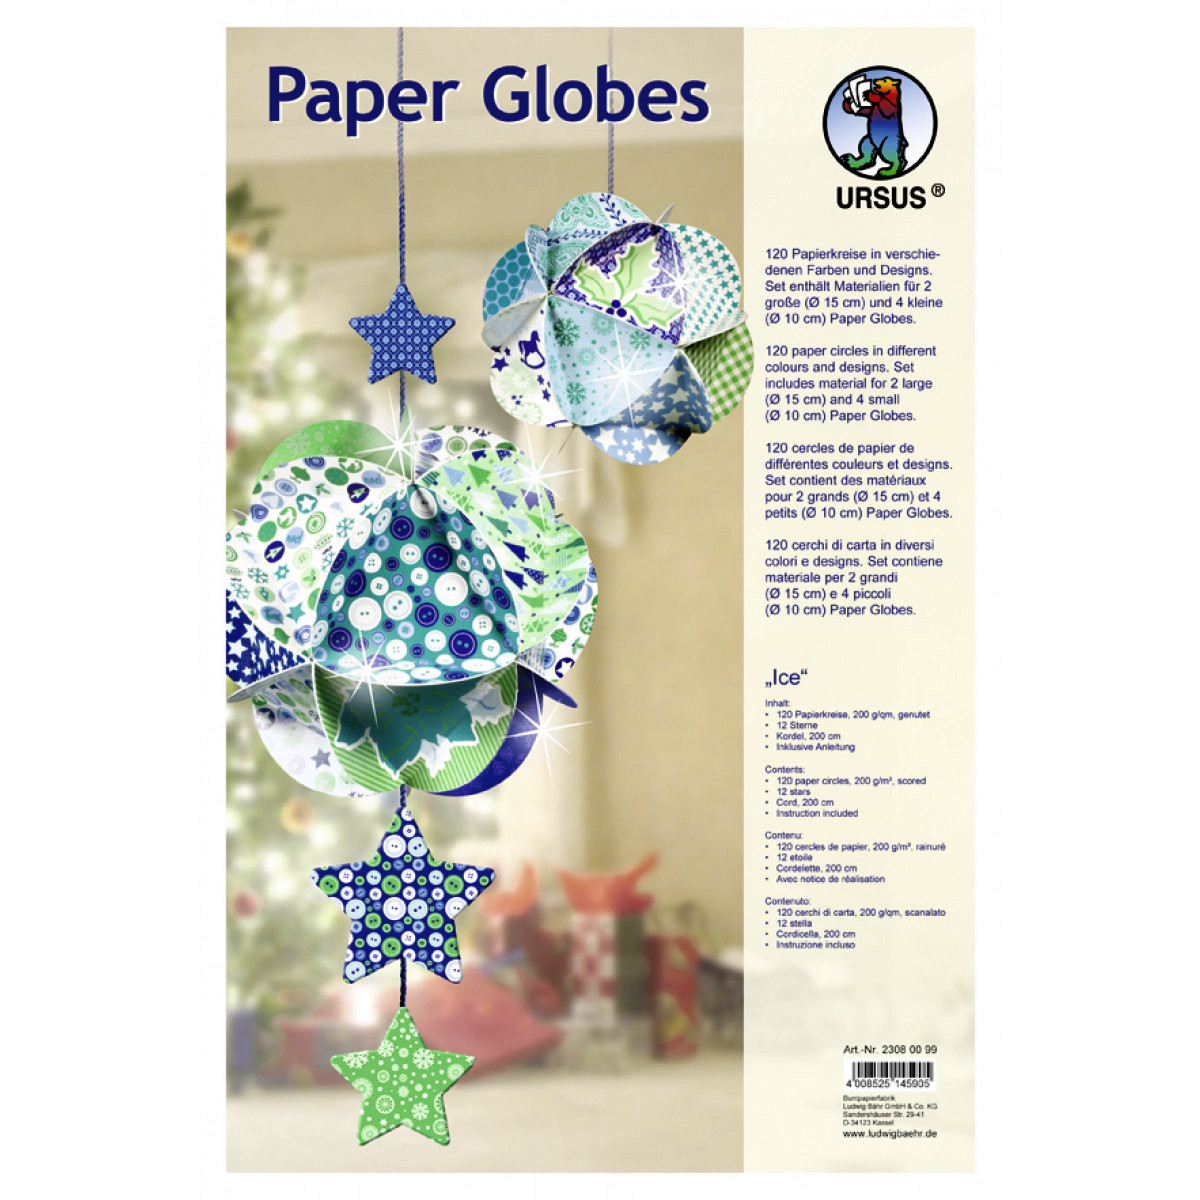 Paper Globes "Ice" Design